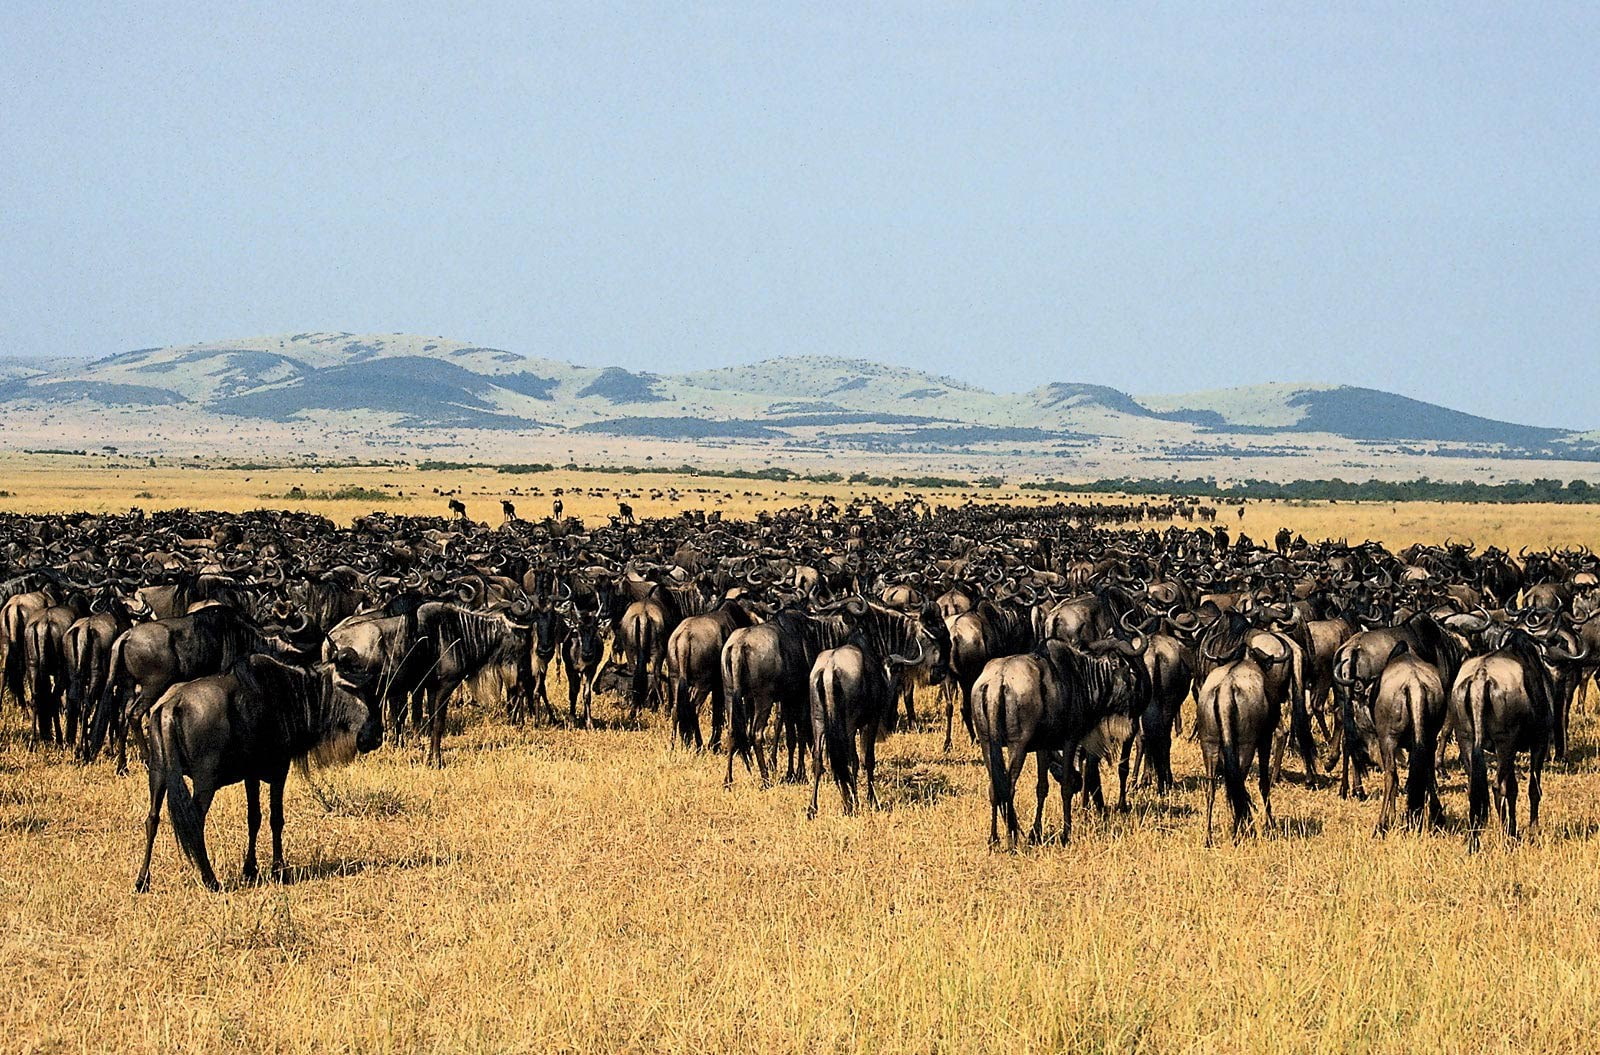 wildebeest, animal themes, mammal, group of animals, animal wildlife